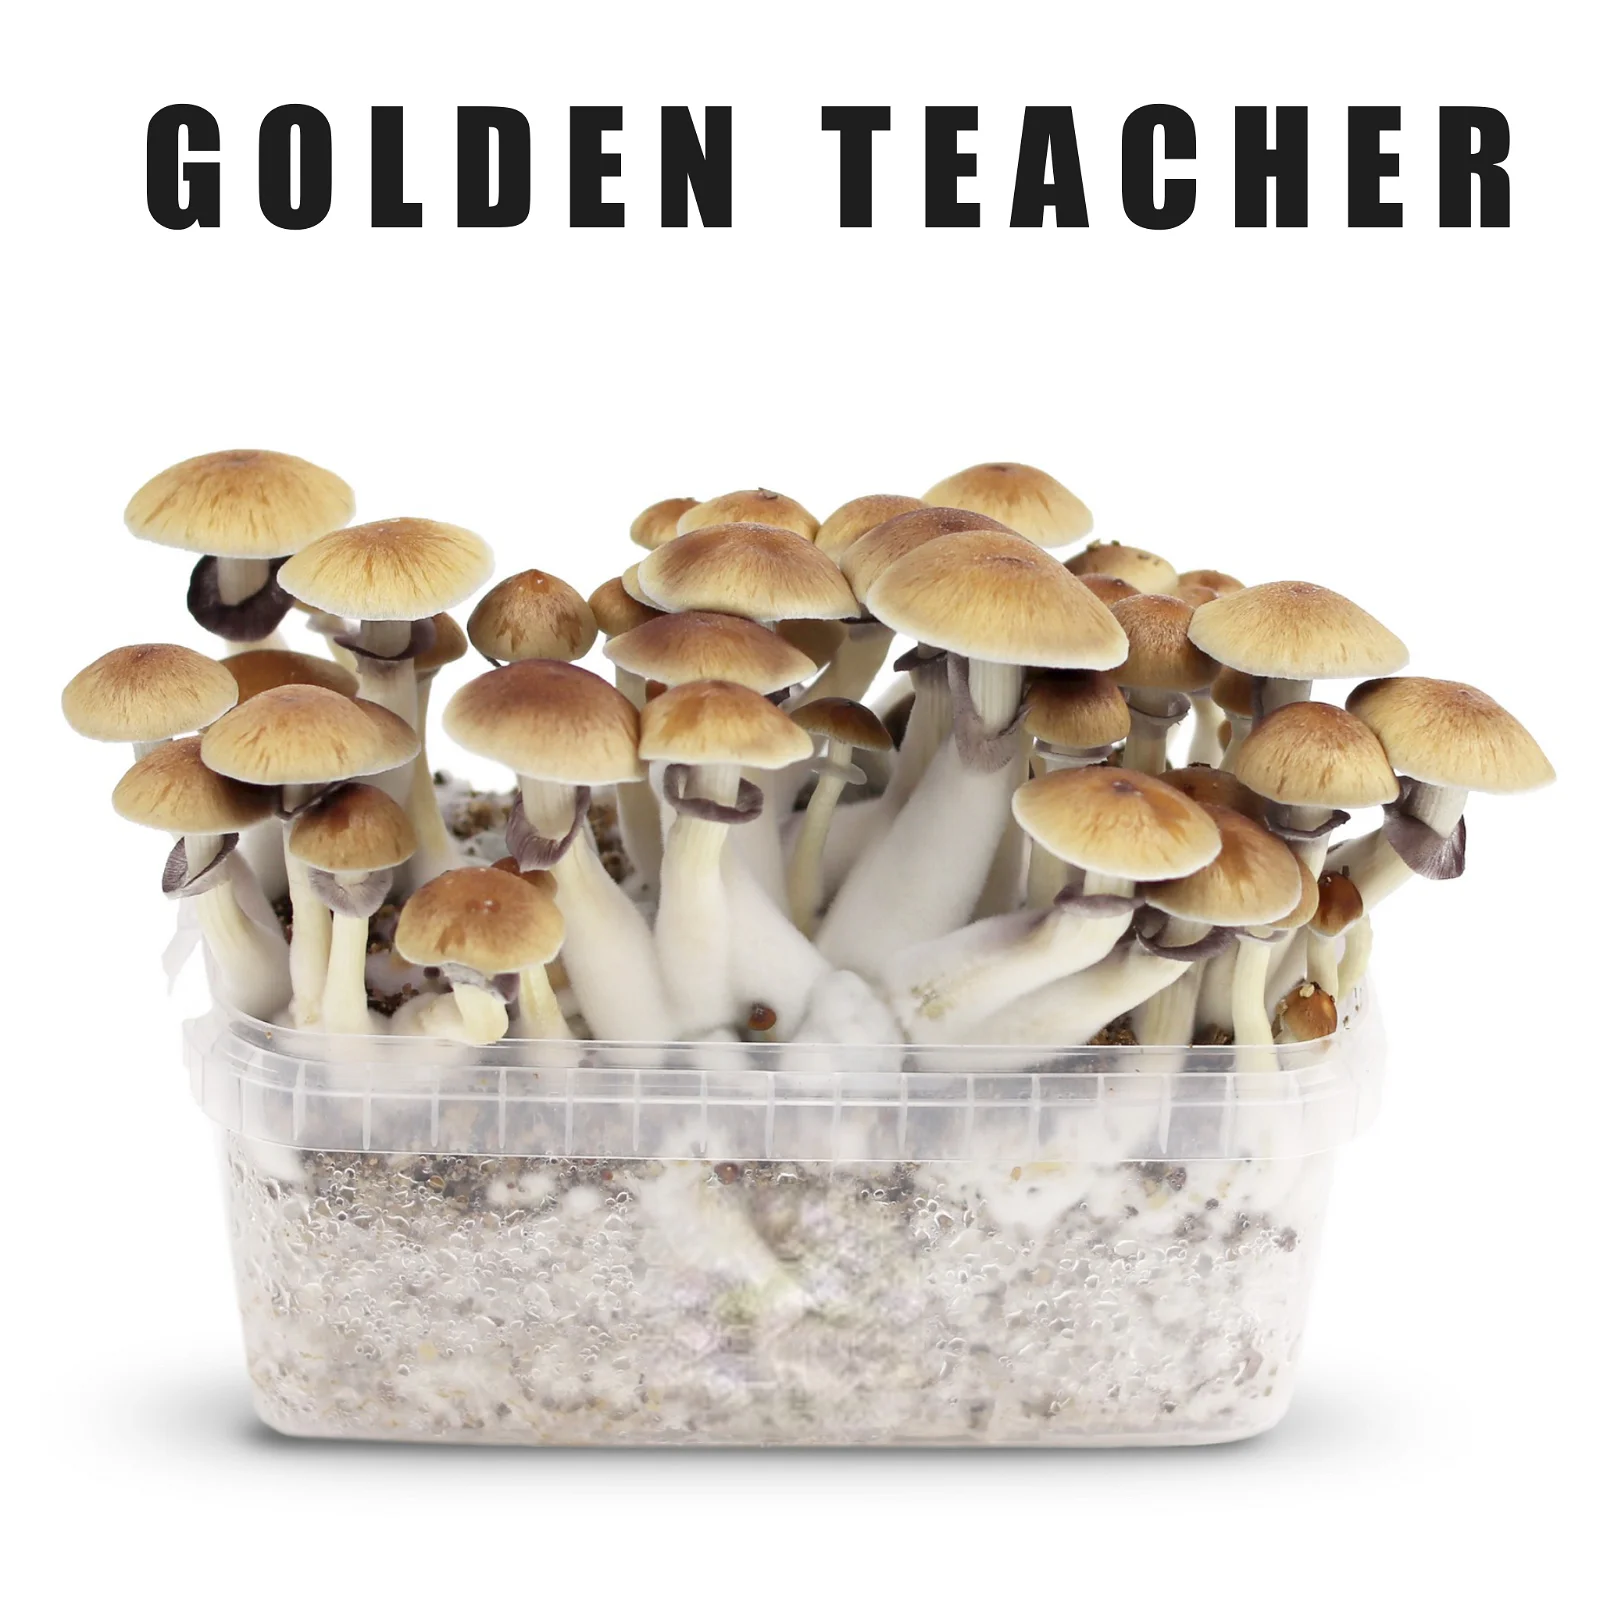 Growkit Golden Teacher